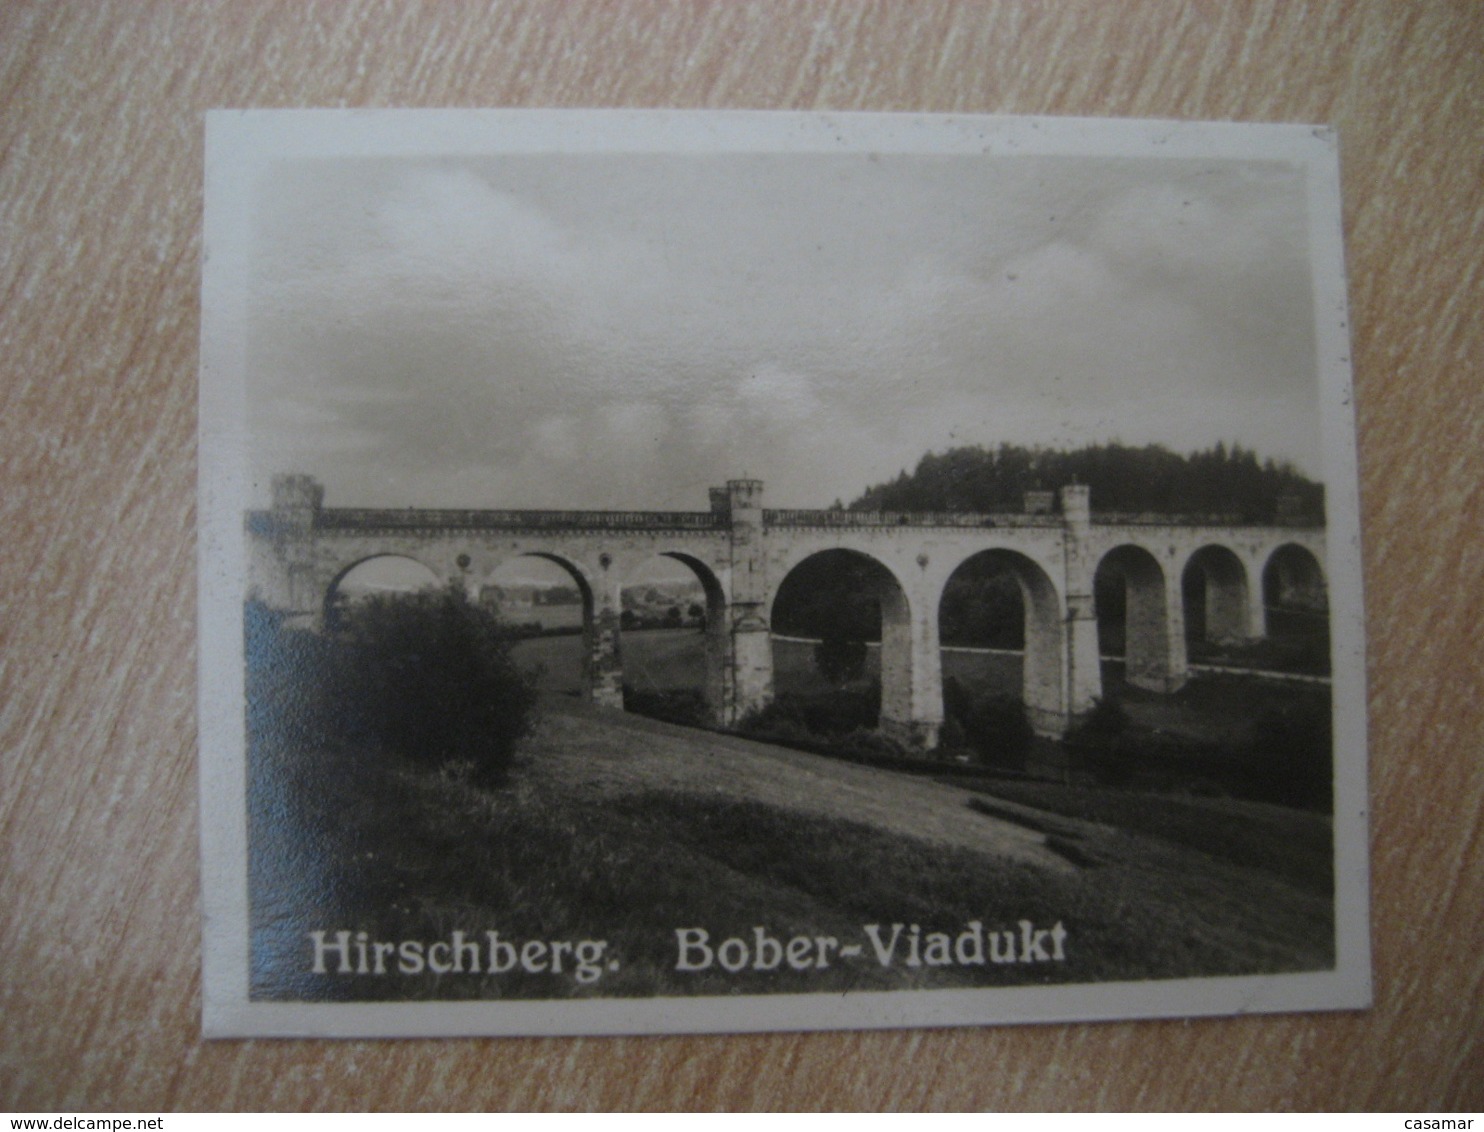 HIRSCHBERG BOBER-VIADUKT Bilder Card Photo Photography (4x5,2 Cm) Schlesien Silesia Poland Czech GERMANY 30s Tobacco - Non Classés